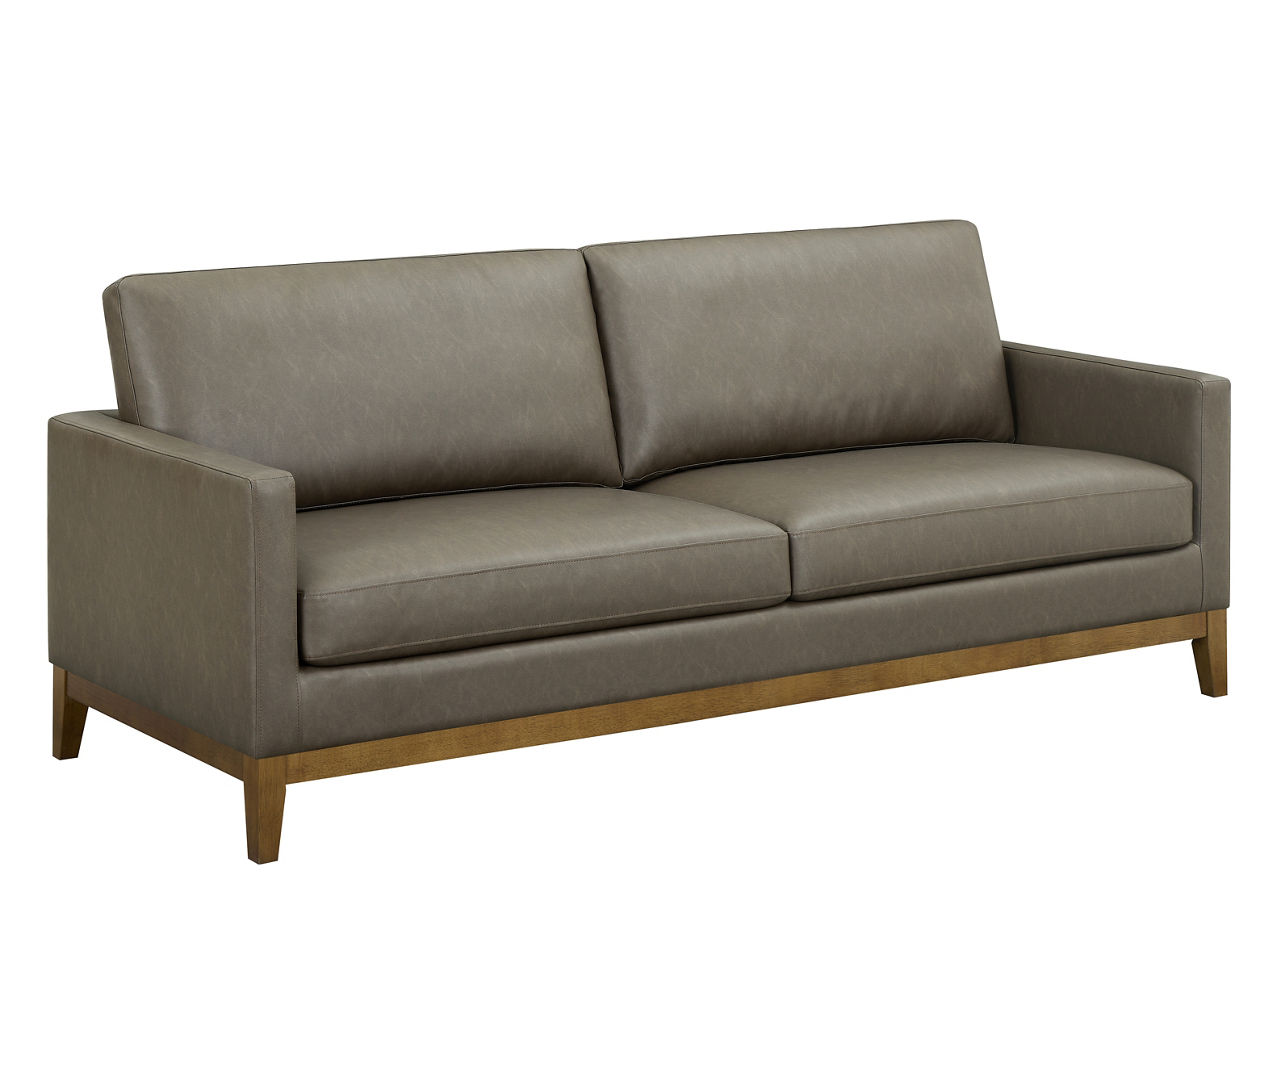 Drexel Rowan Brown Faux Leather Sofa | Big Lots